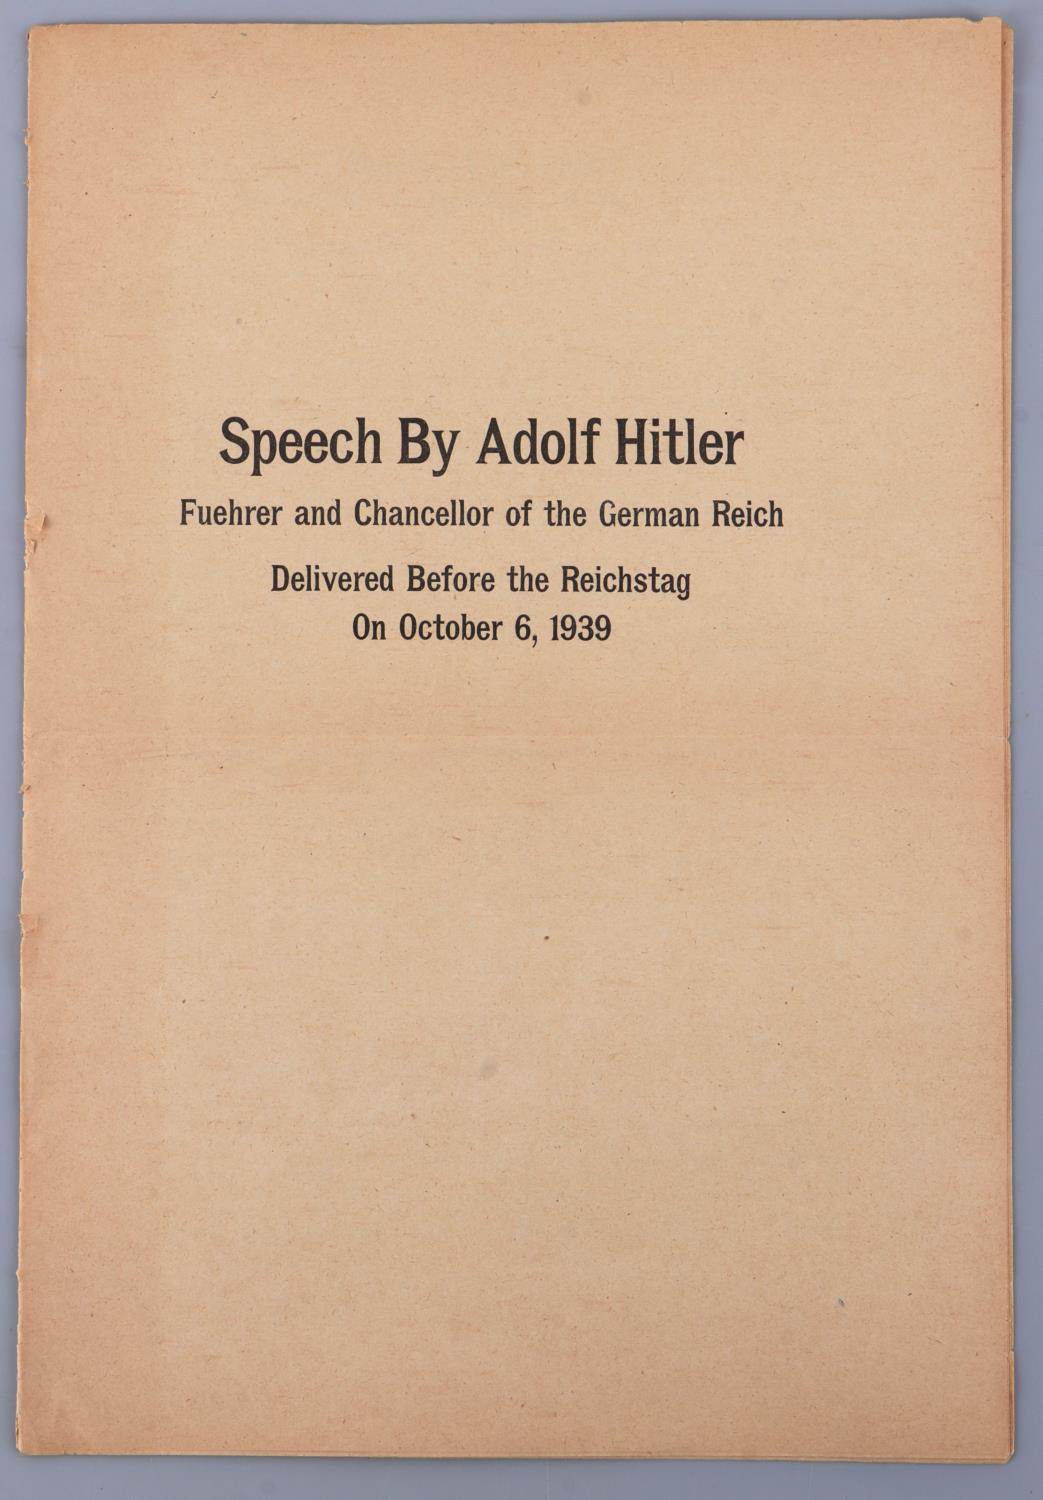 SPEECH BY ADOLF HITLER DELIVERED TO REICHSTAG 1939